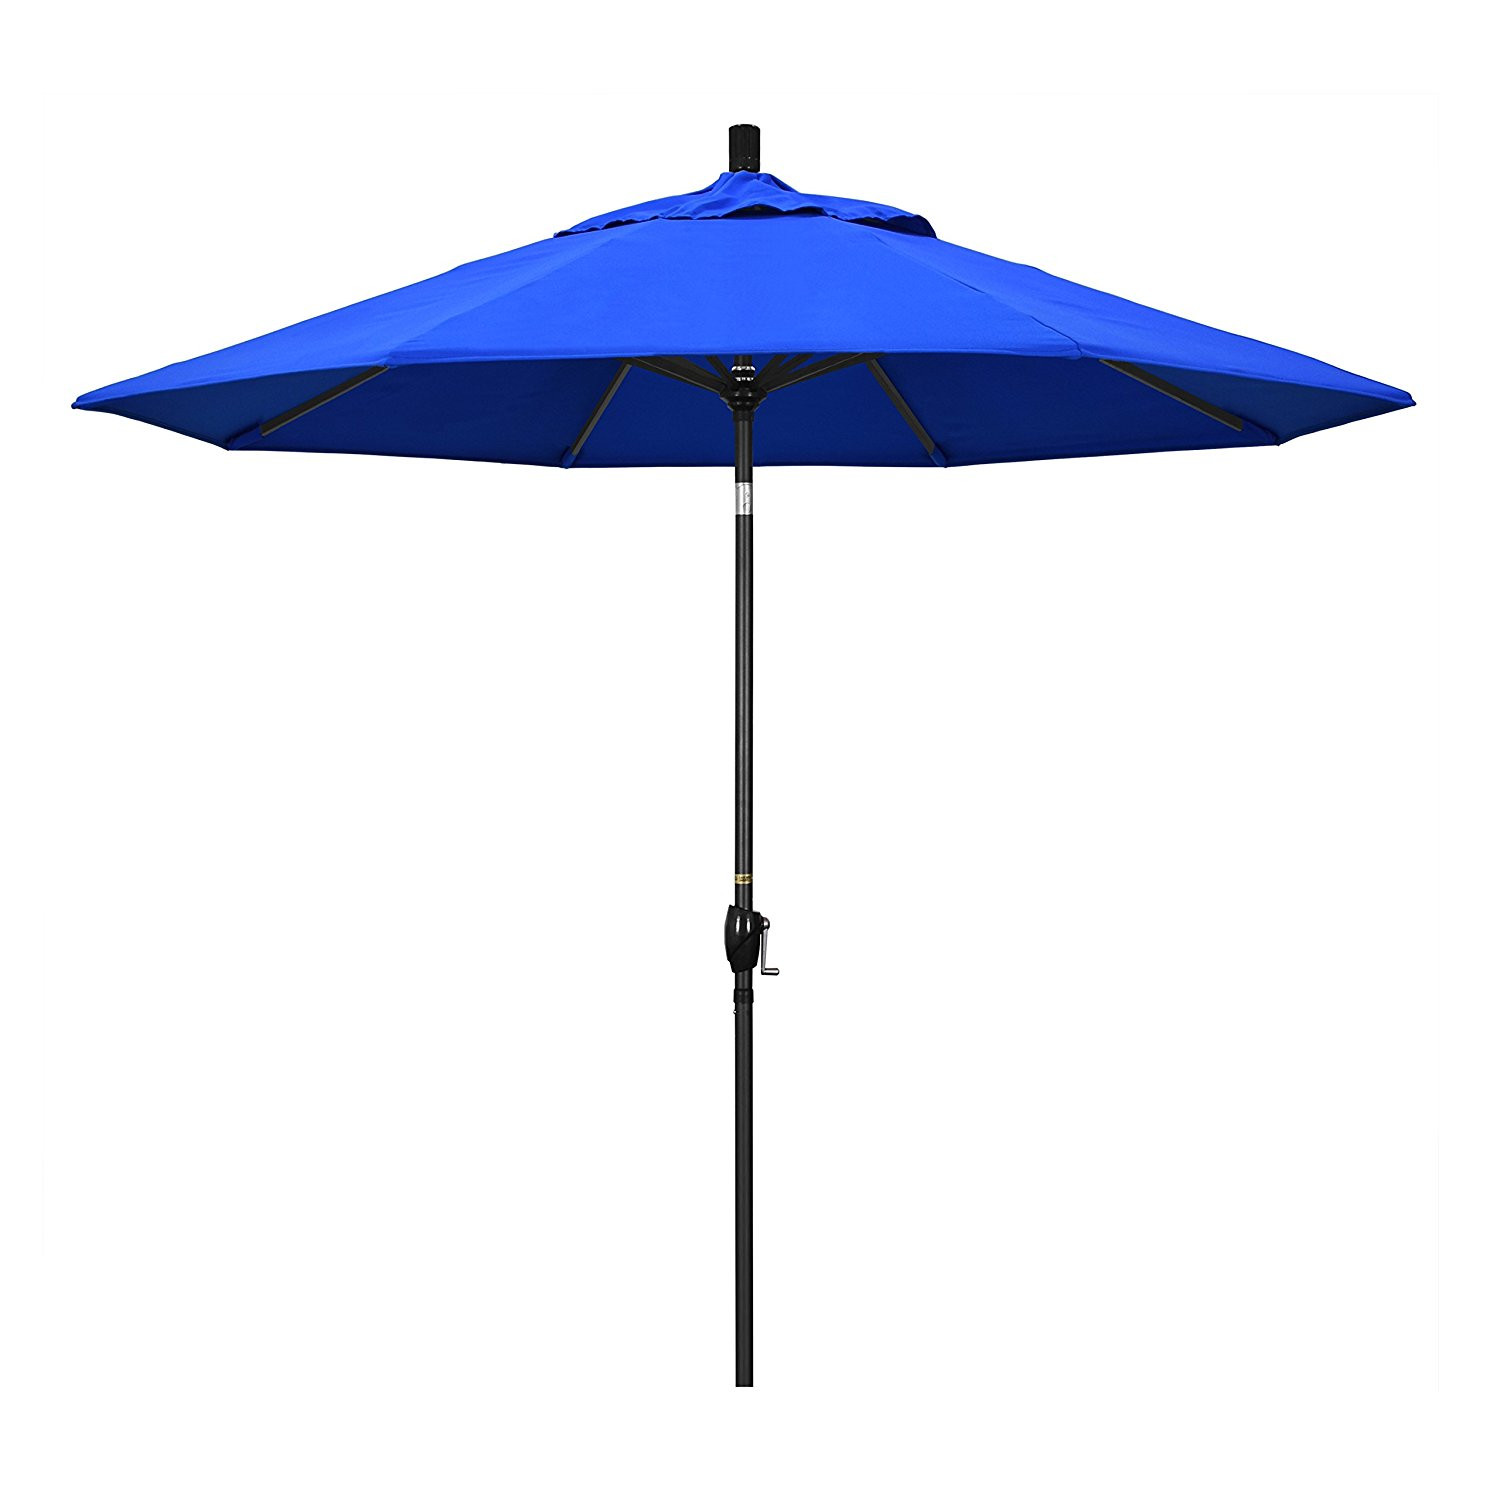 Best ideas about Sunbrella Patio Umbrellas
. Save or Pin Best Sunbrella Umbrellas Patio Market Umbrella Reviews Now.